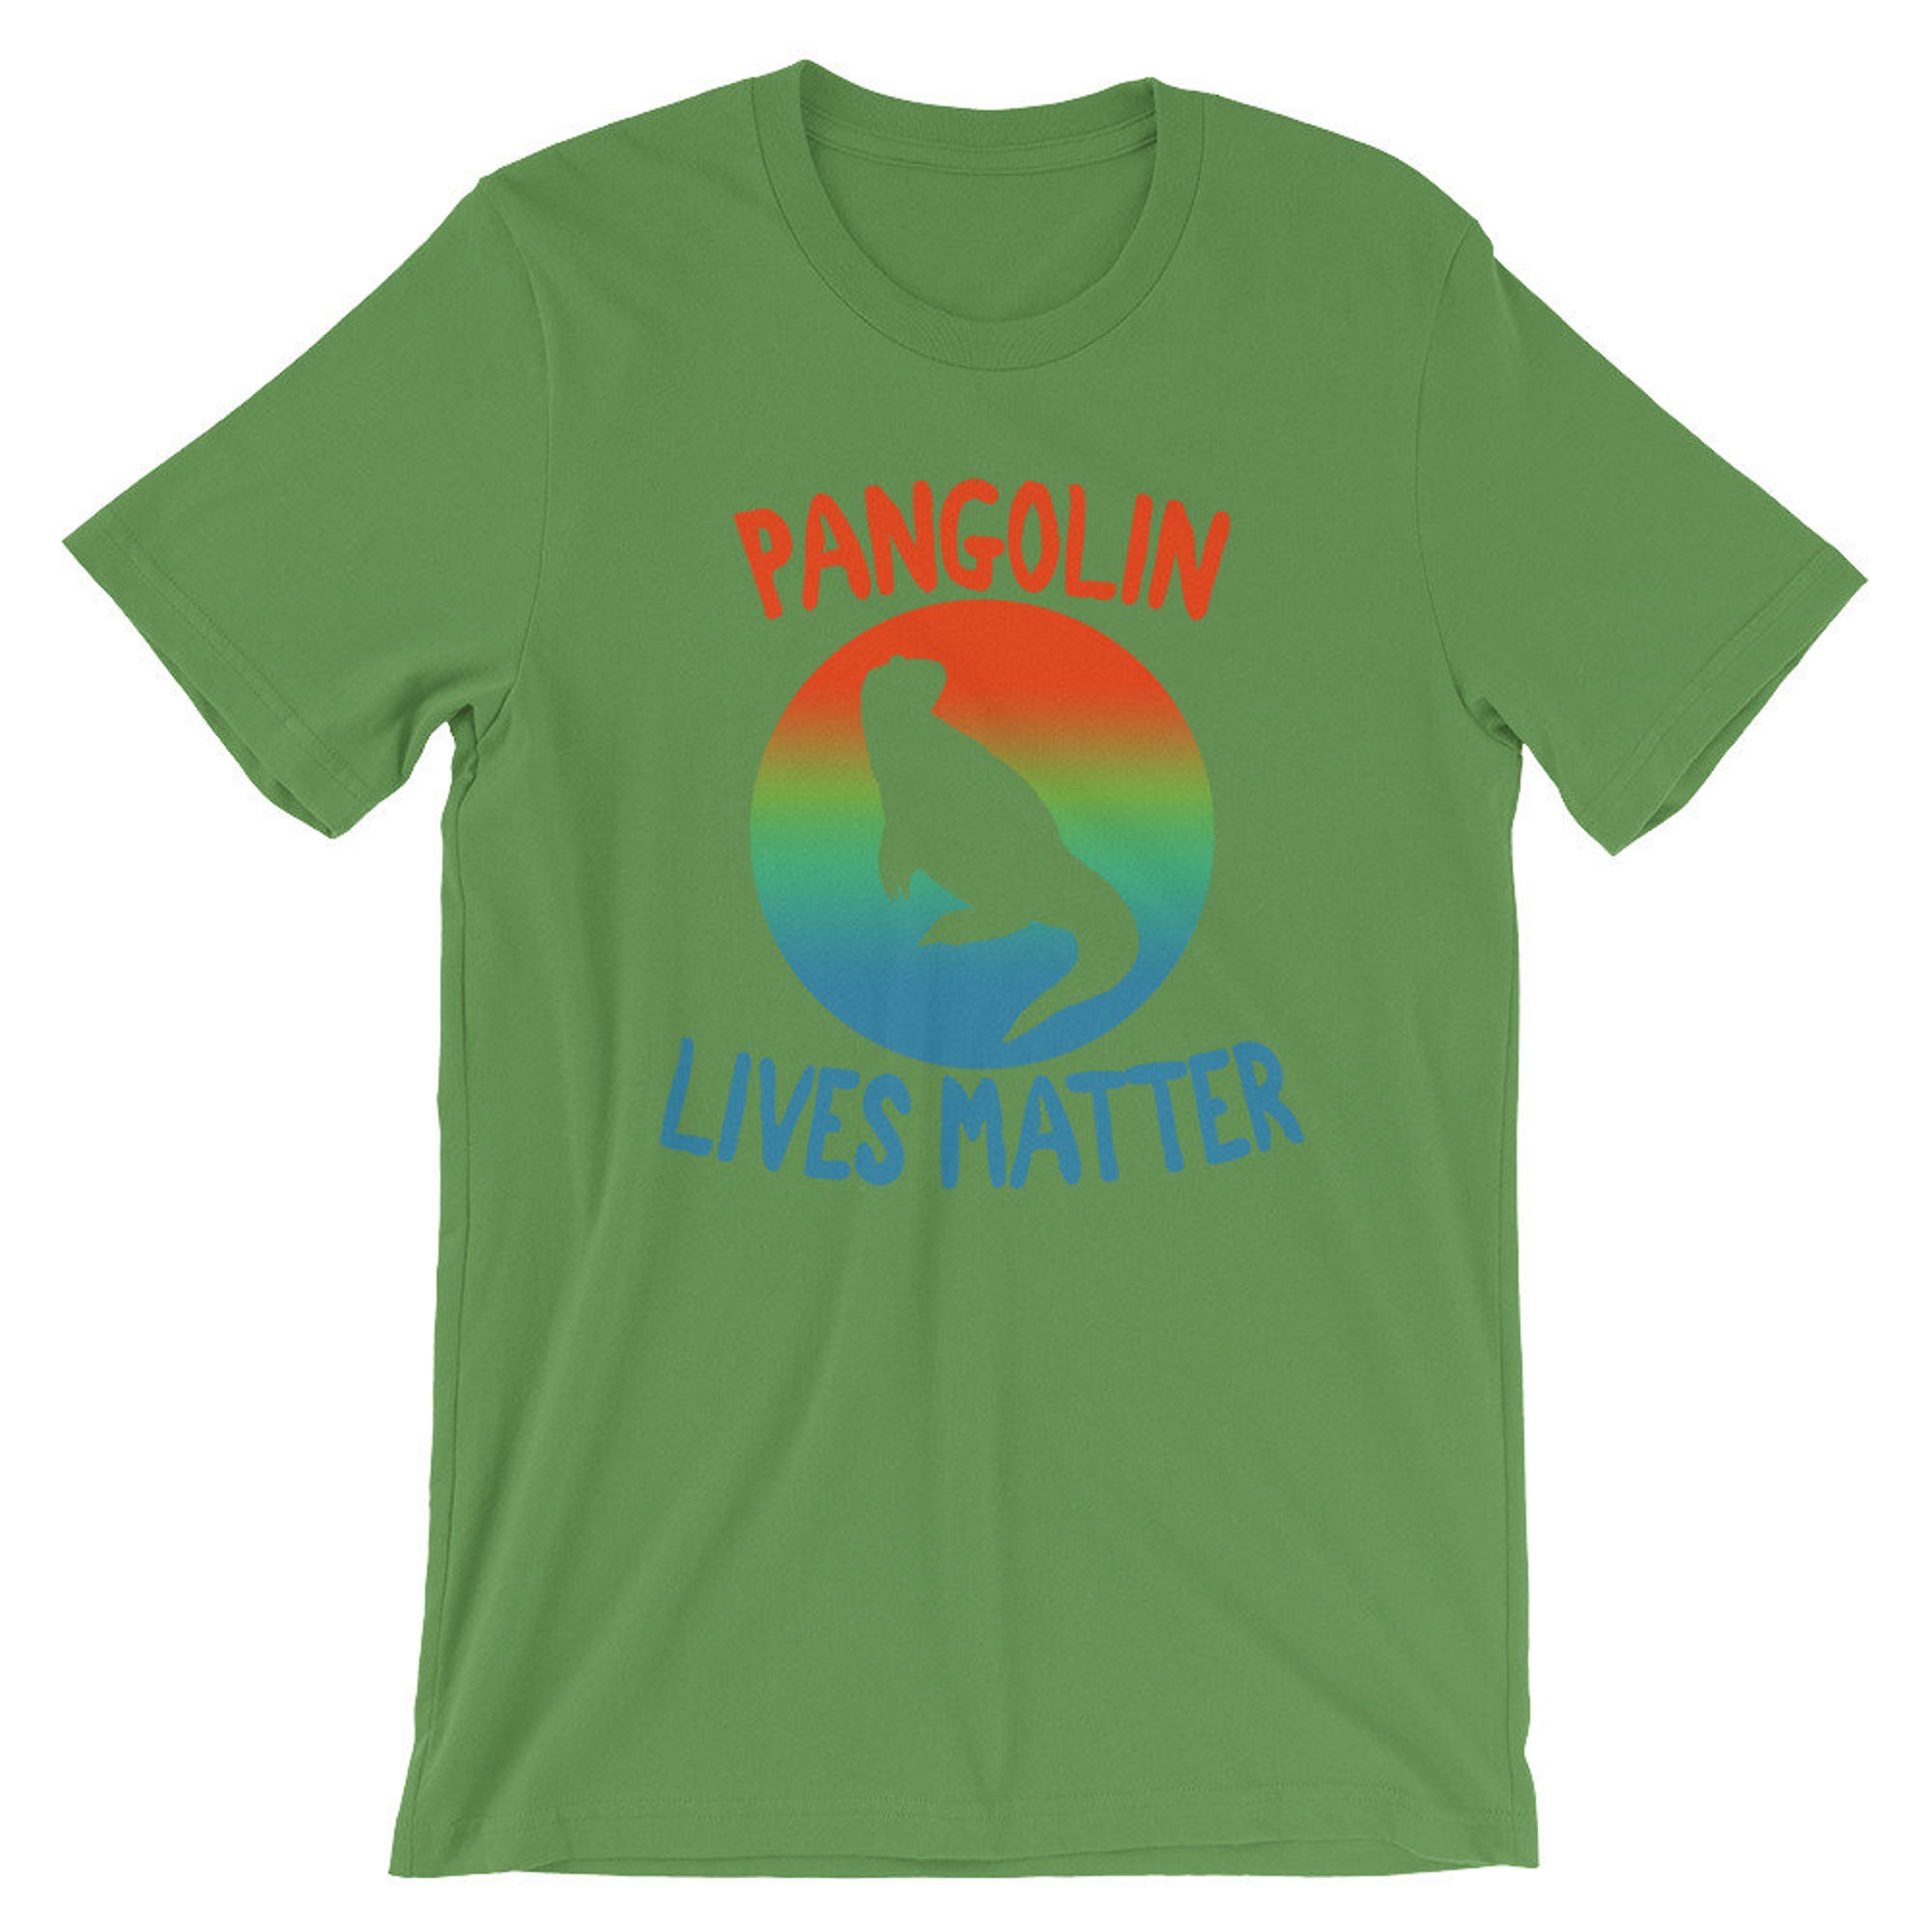 Discover Pangolin Lives Matter T-Shirt | Cool Pangolin Endangered Shirt | Anteater Animal Humor Gift Tee